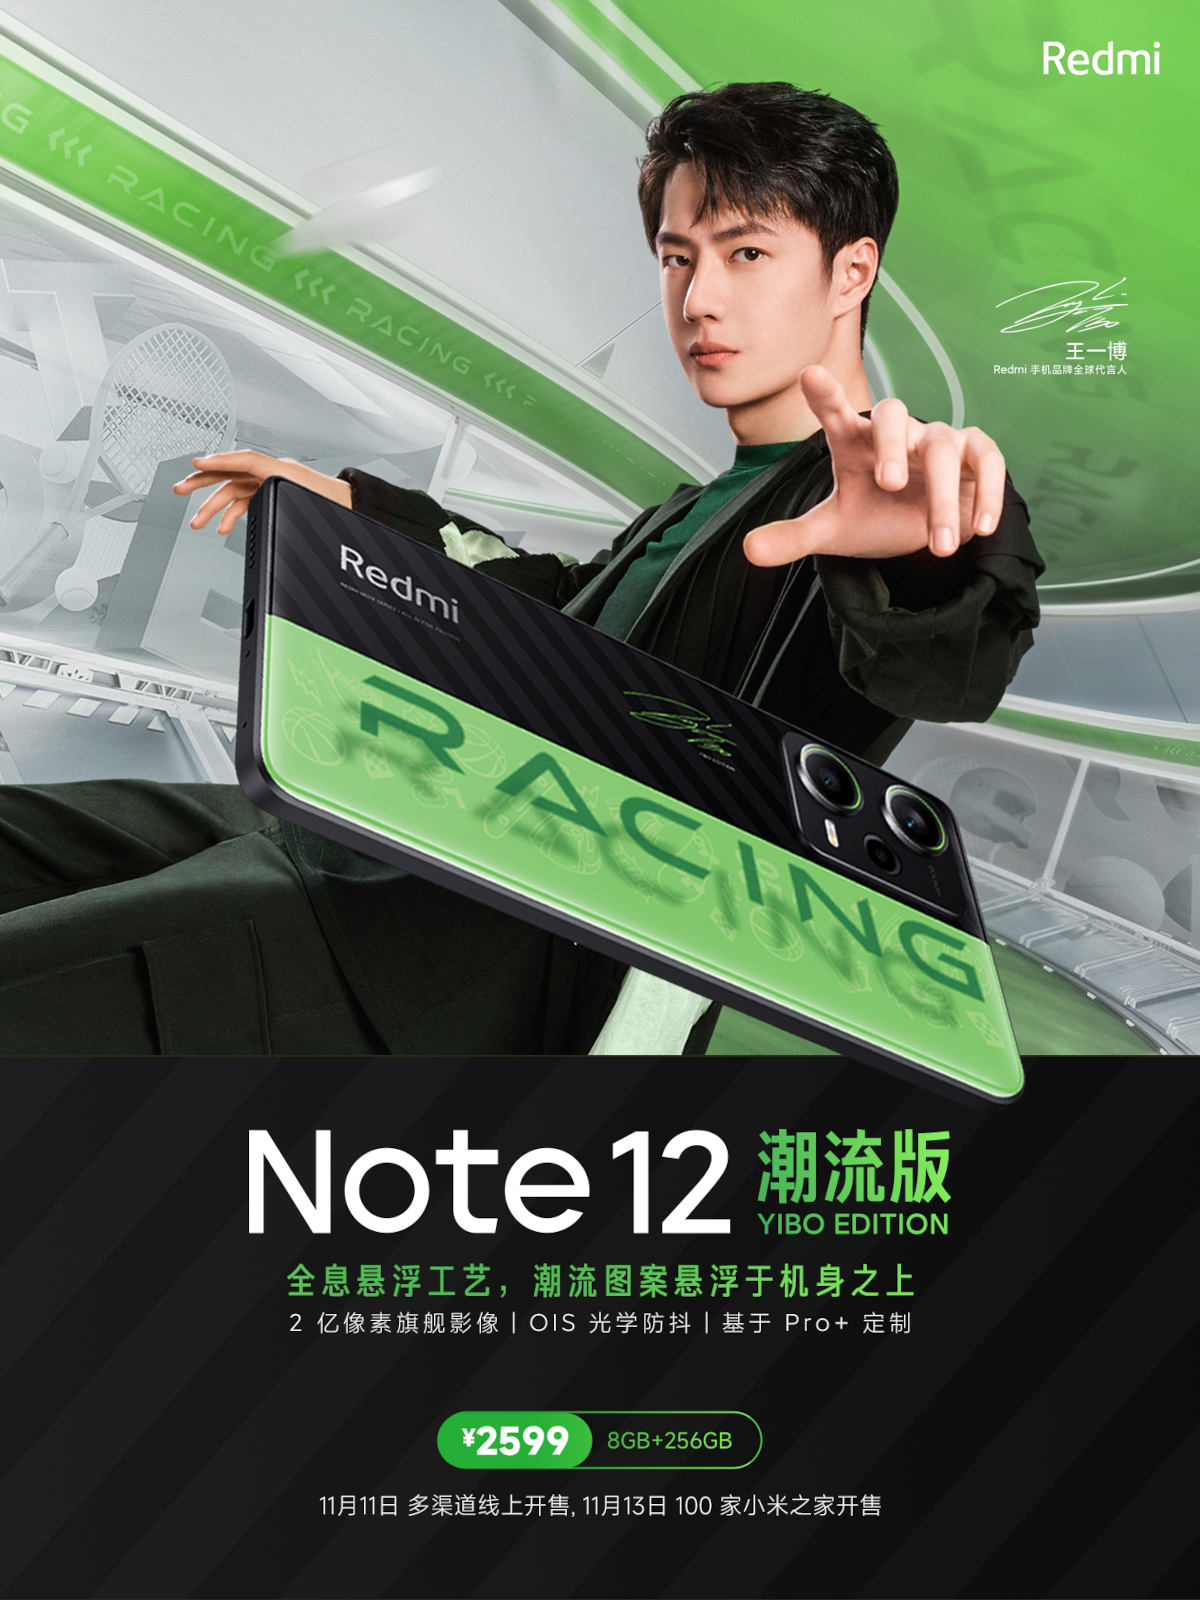 Redmi Note 12 Yibo Edition